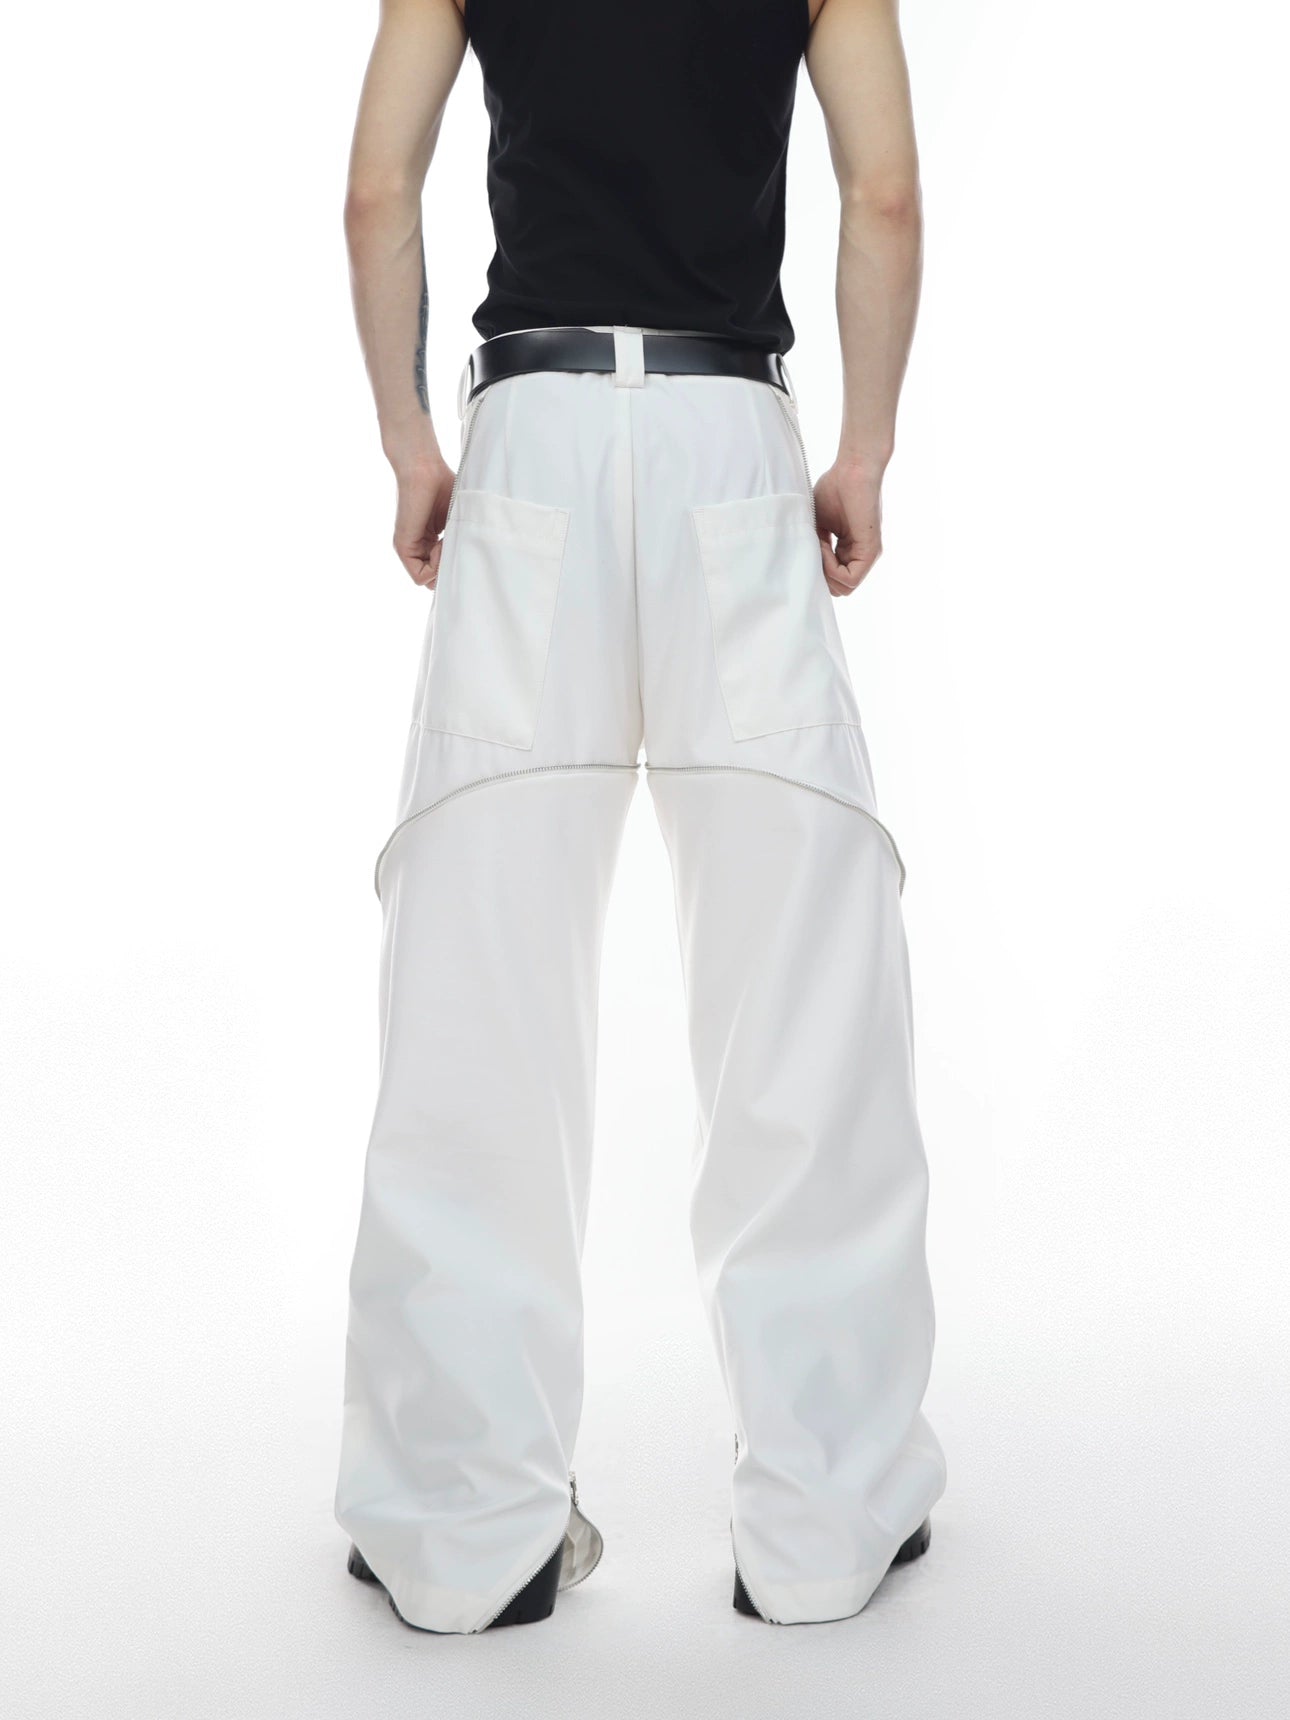 CulturE's original niche structure, design with zipper, split bootcut trousers, draped slacks and white trousers